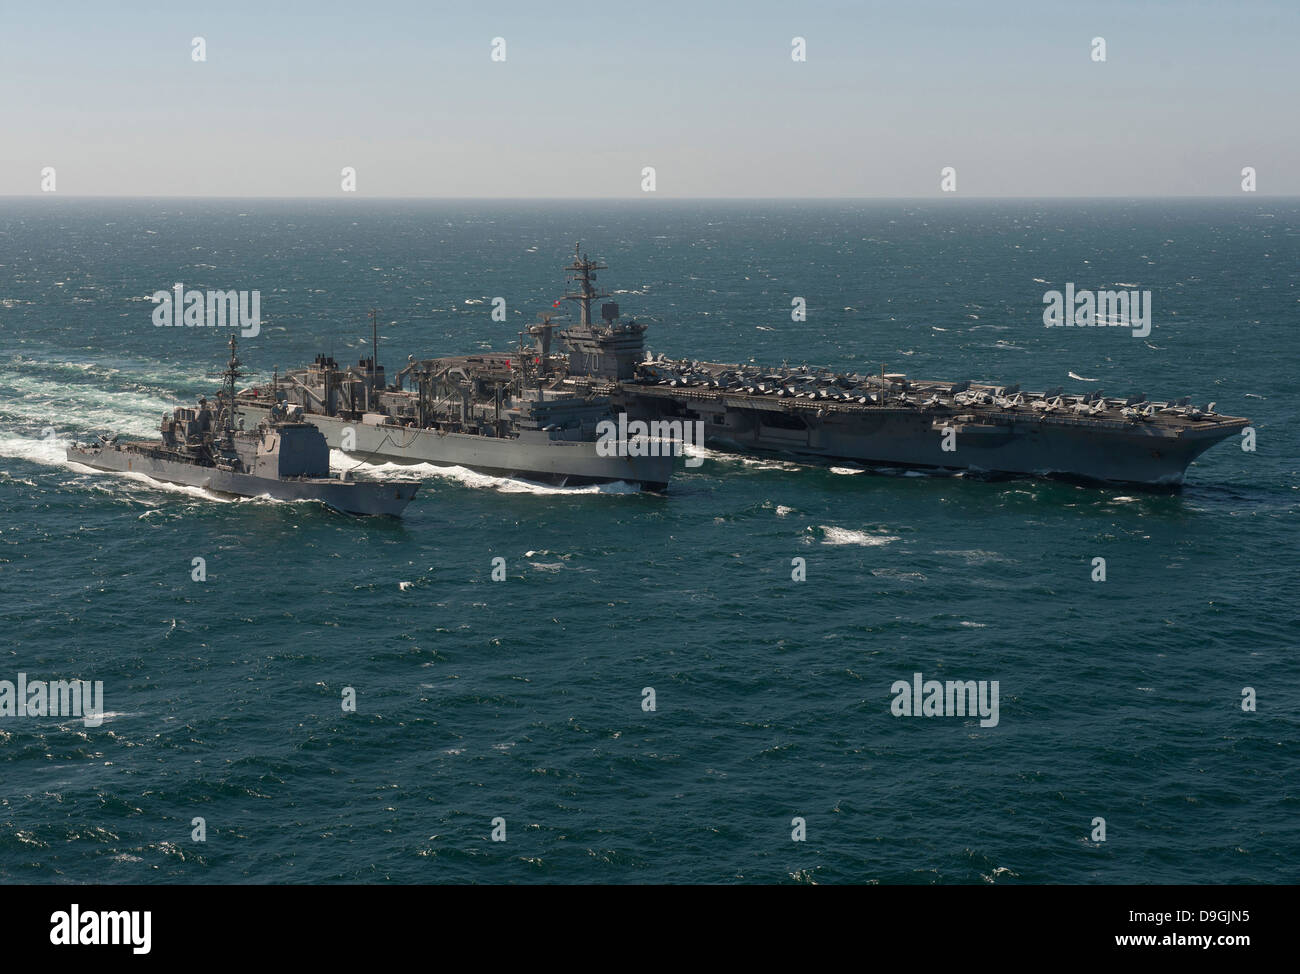 Underway replenishment at sea with U.S. Navy ships in the Arabian Gulf. Stock Photo